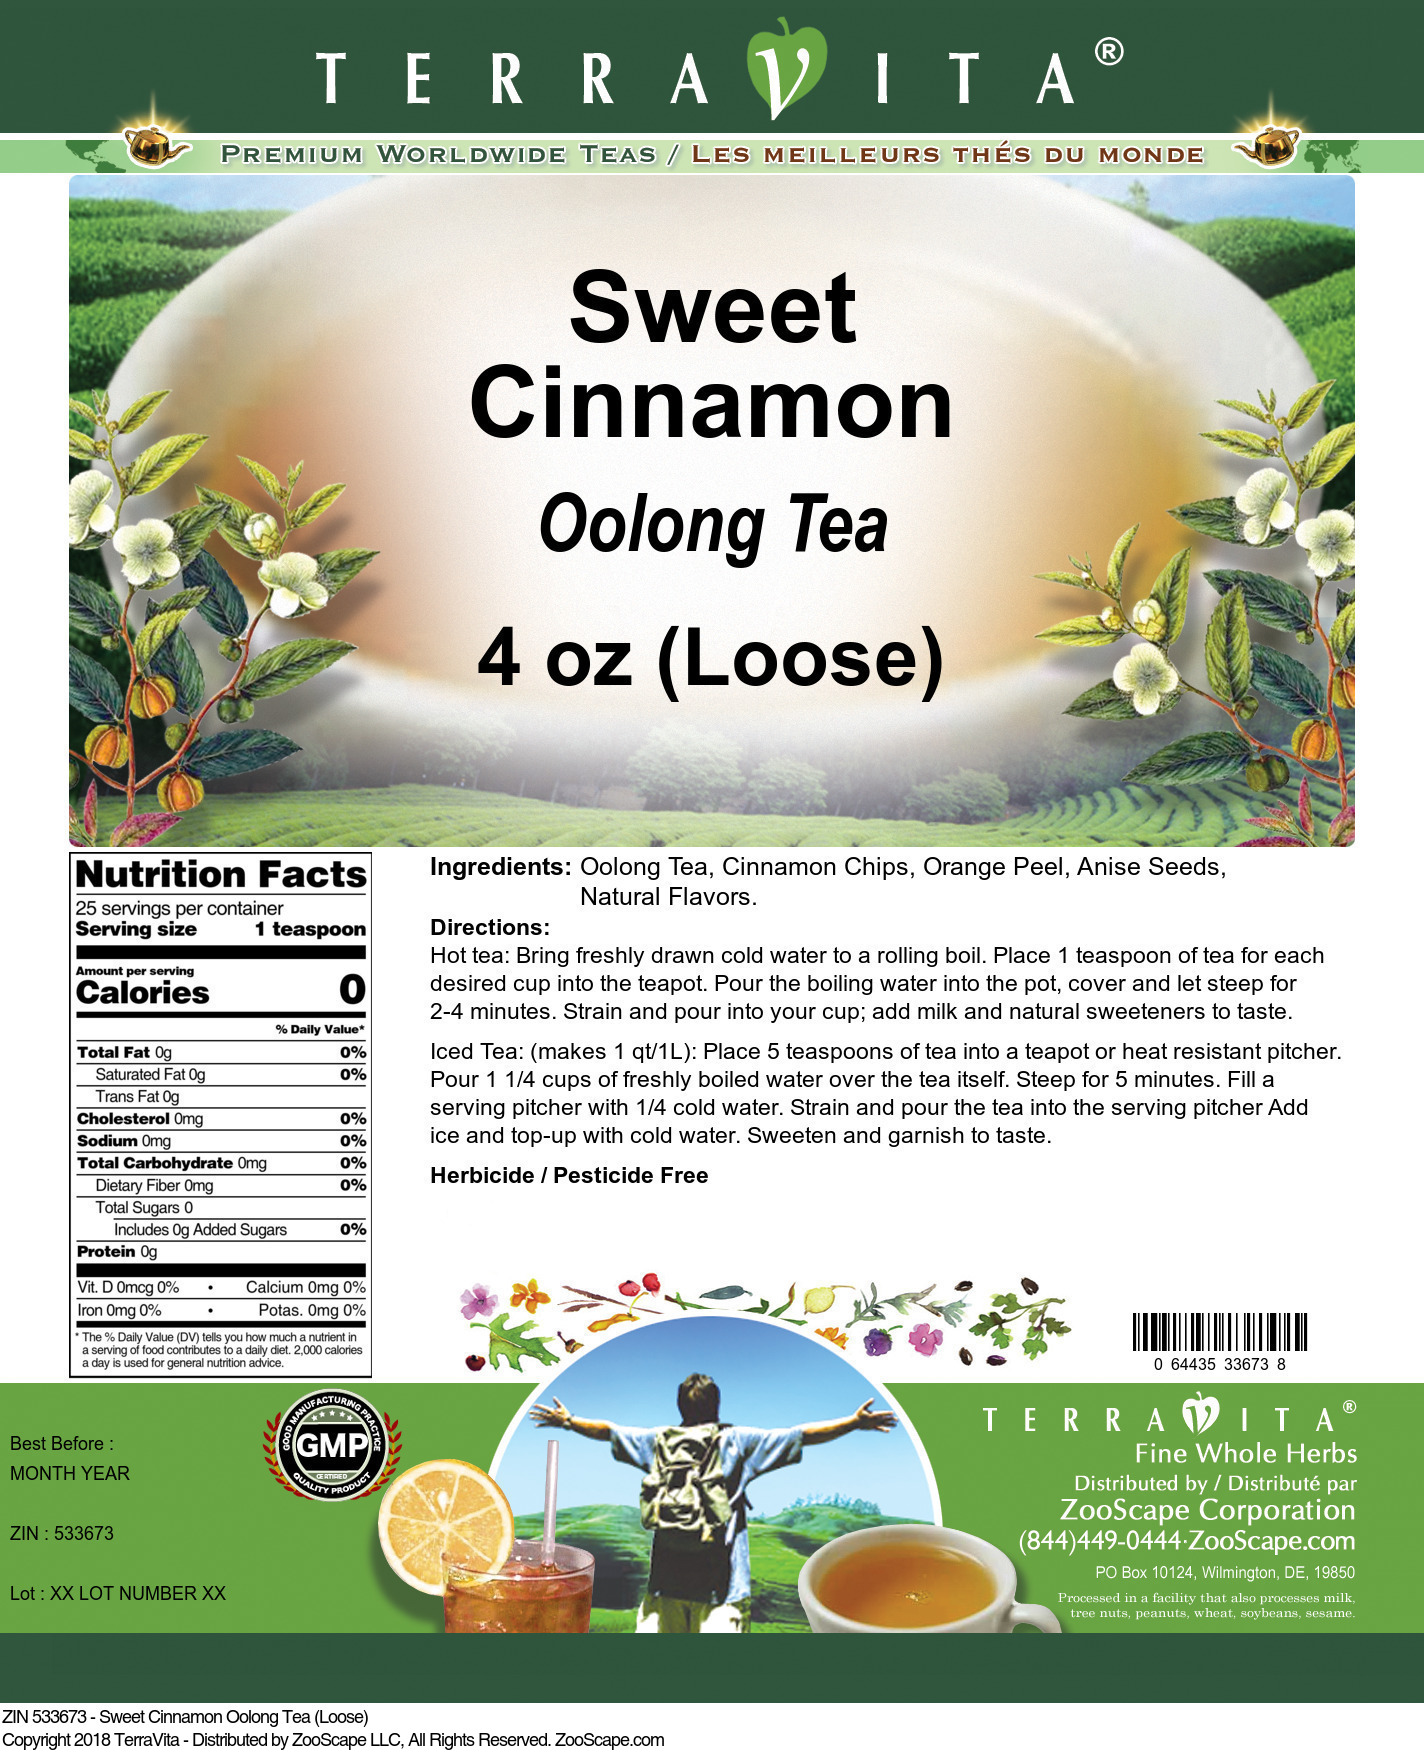 Sweet Cinnamon Oolong Tea (Loose) - Label